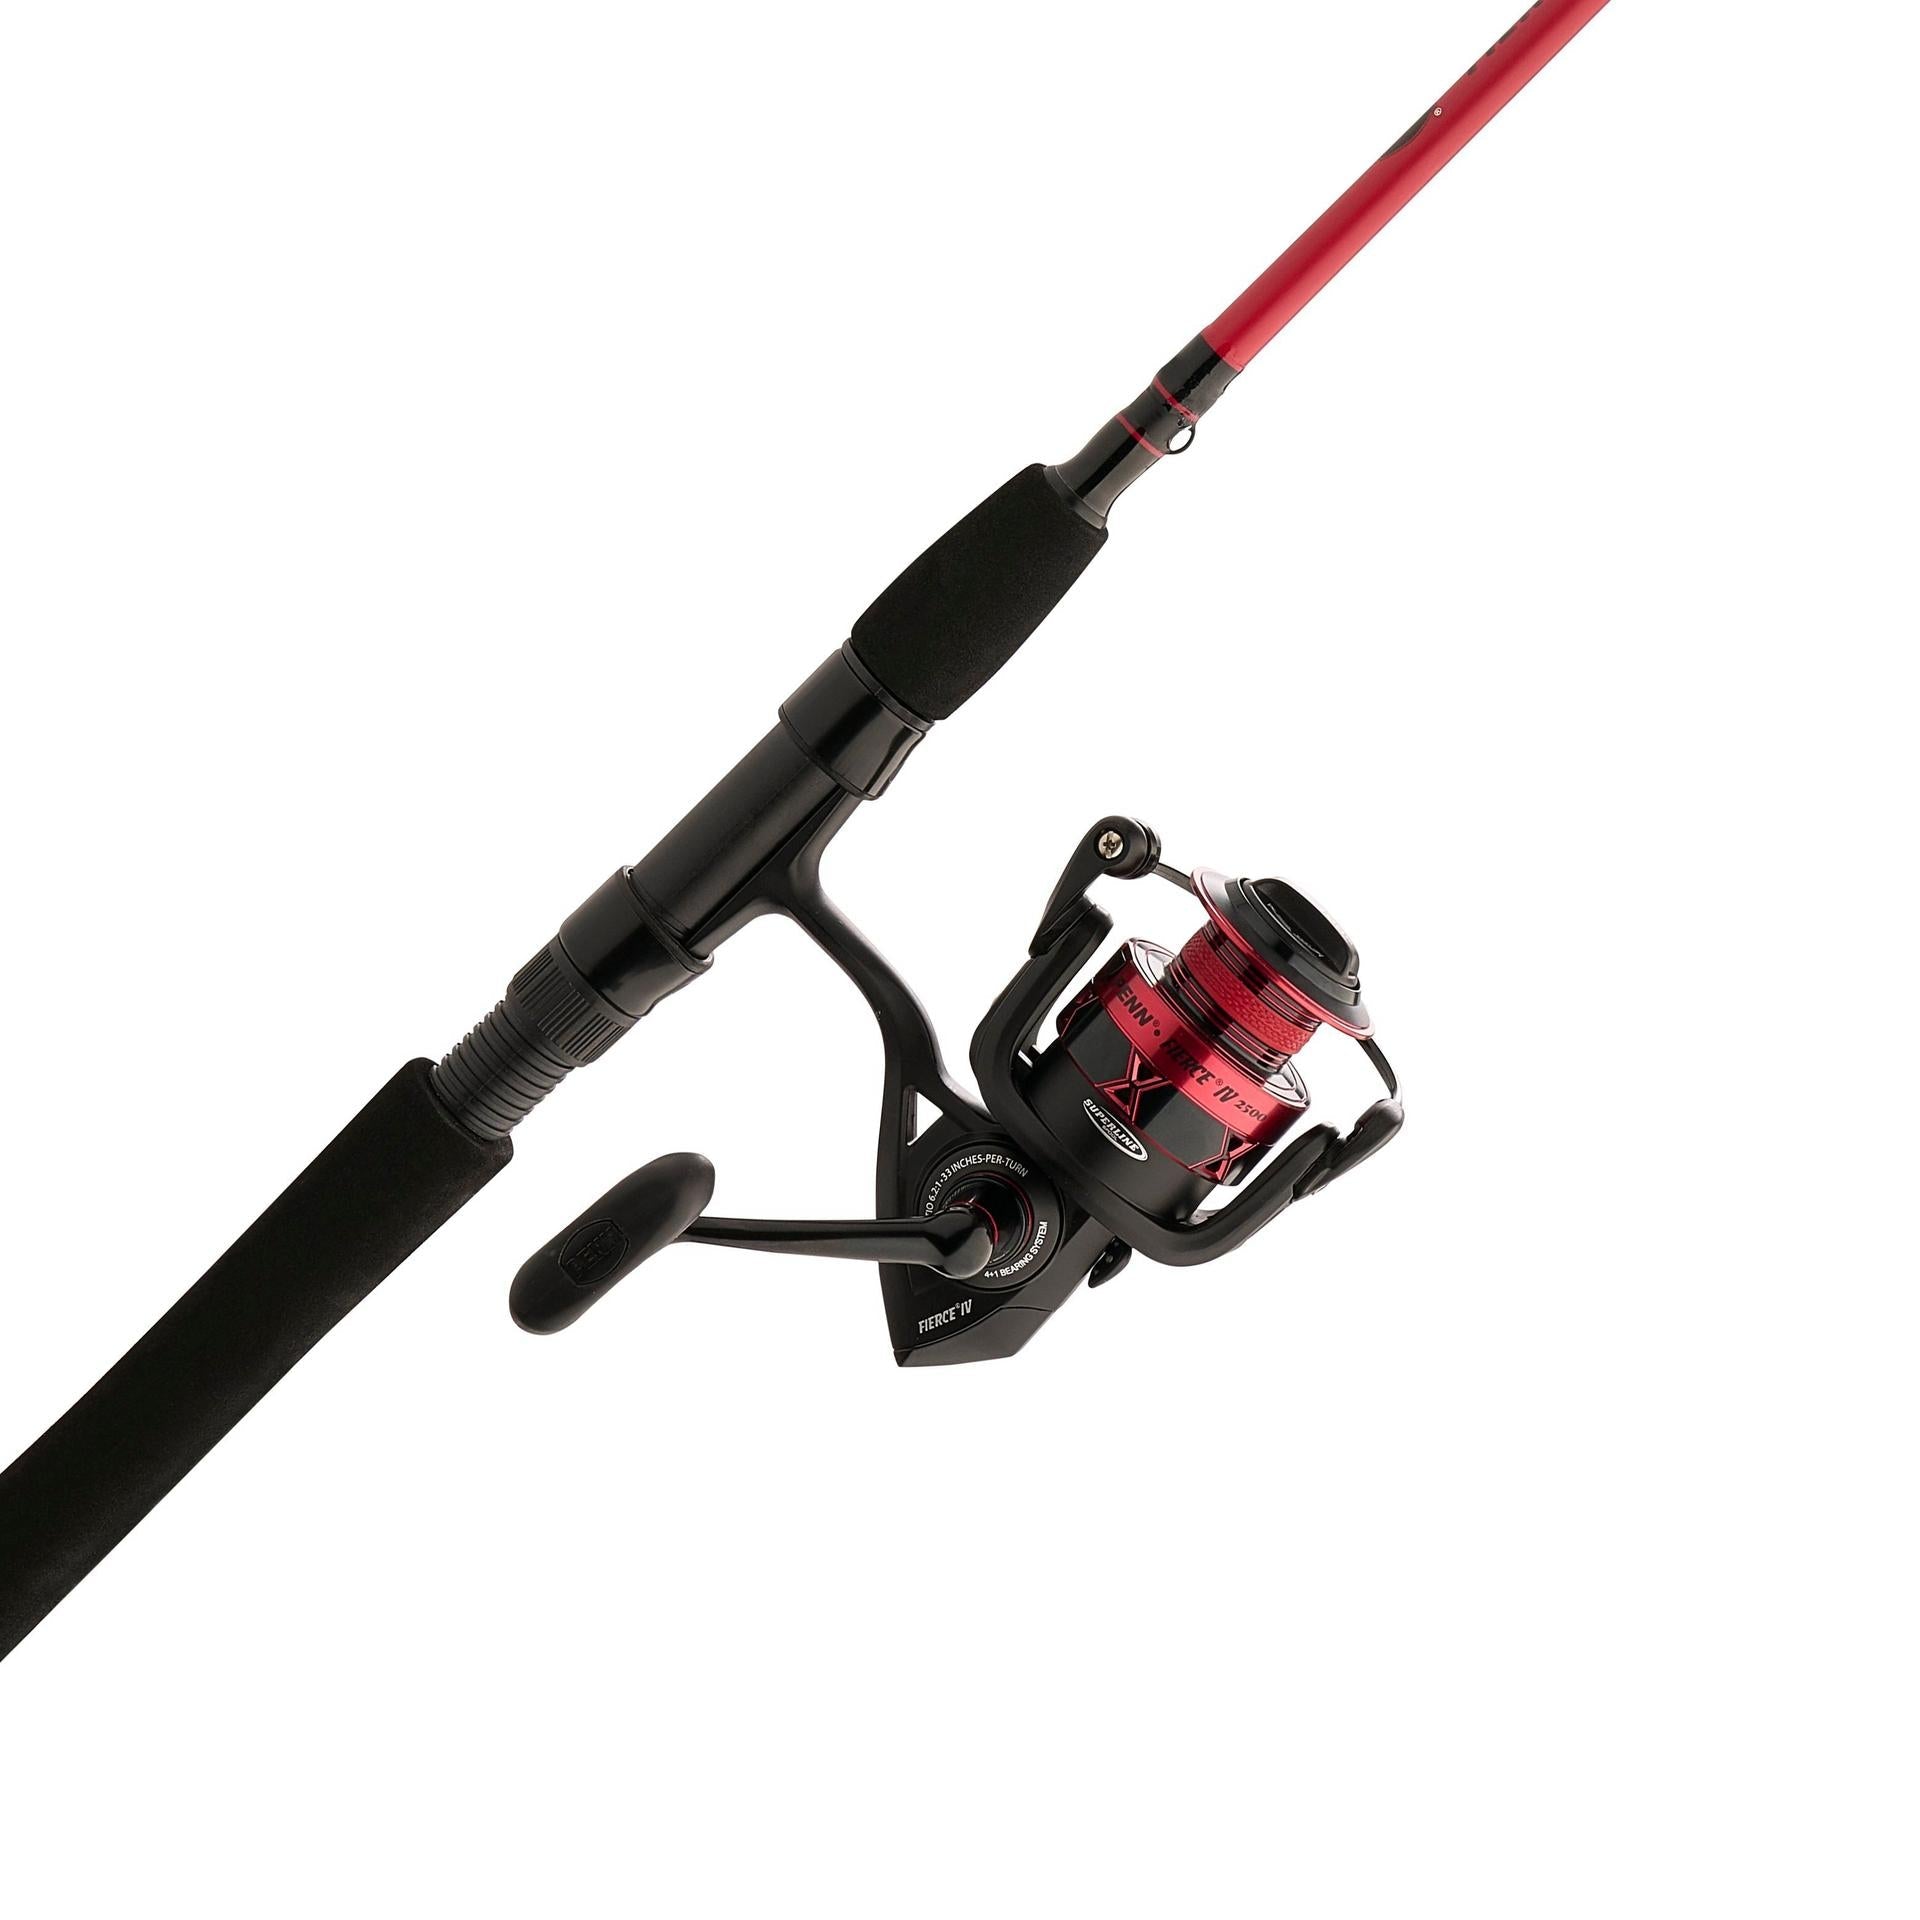 PENN 7' Wrath II Fishing Rod and Spinning Reel Combo, Size 5000